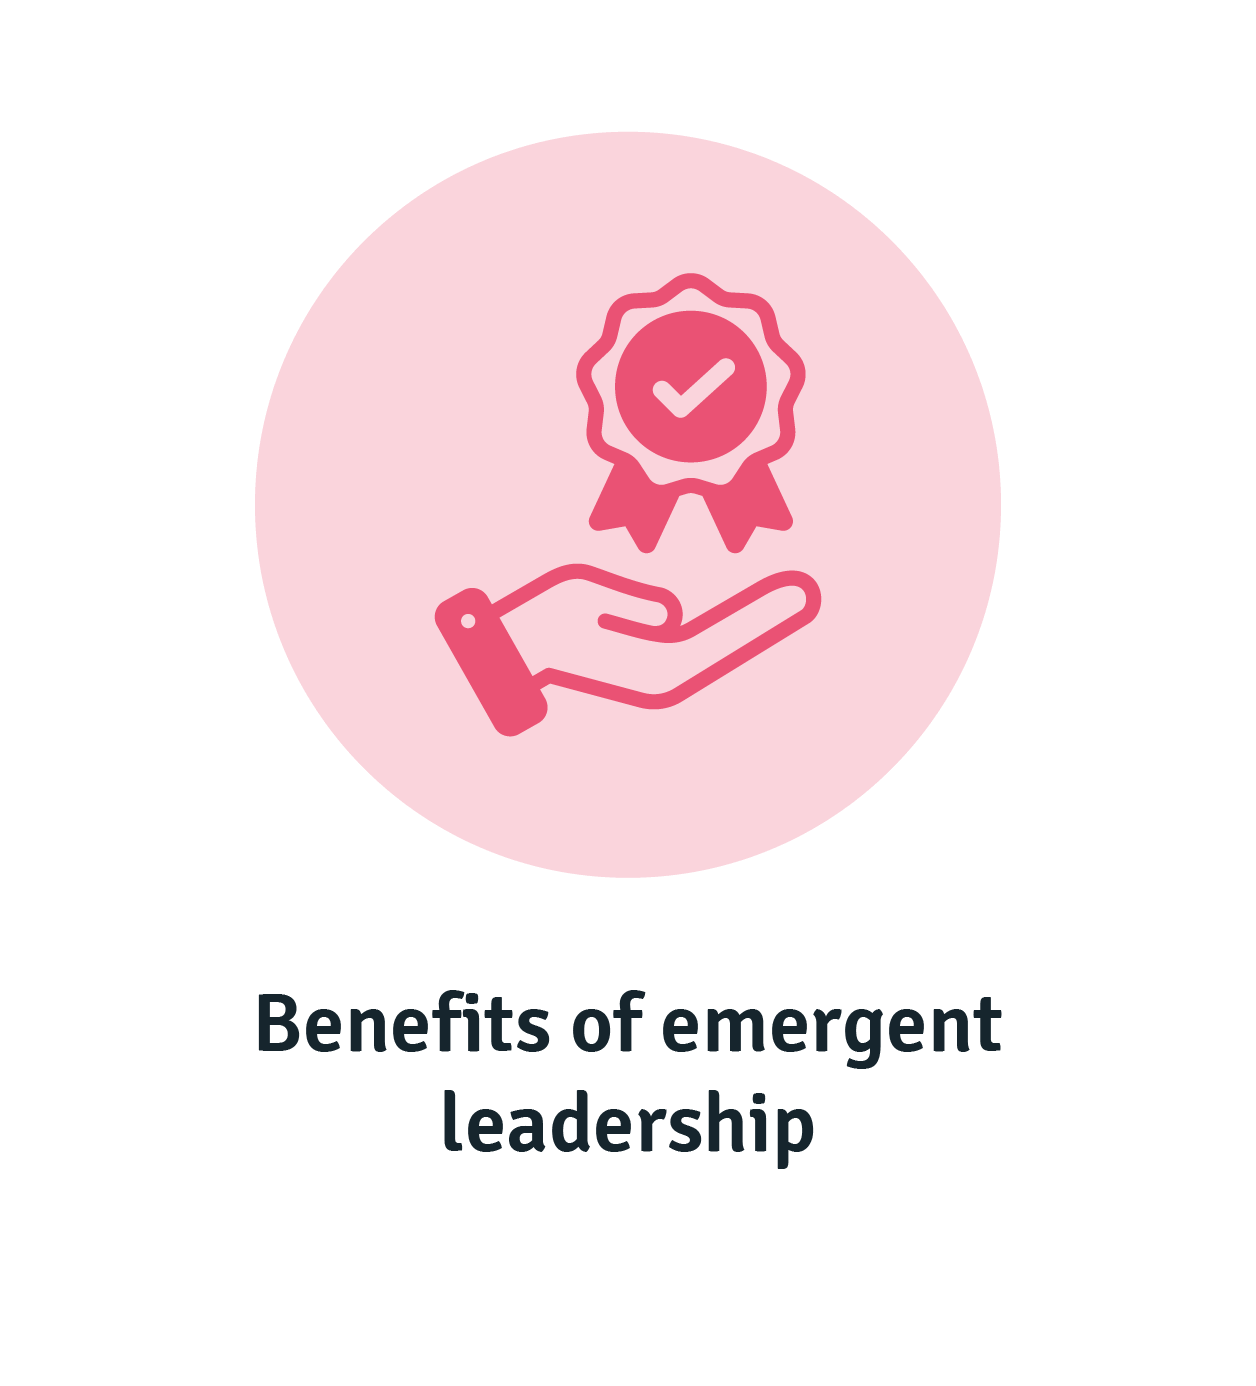 Benefits of emergent leadership